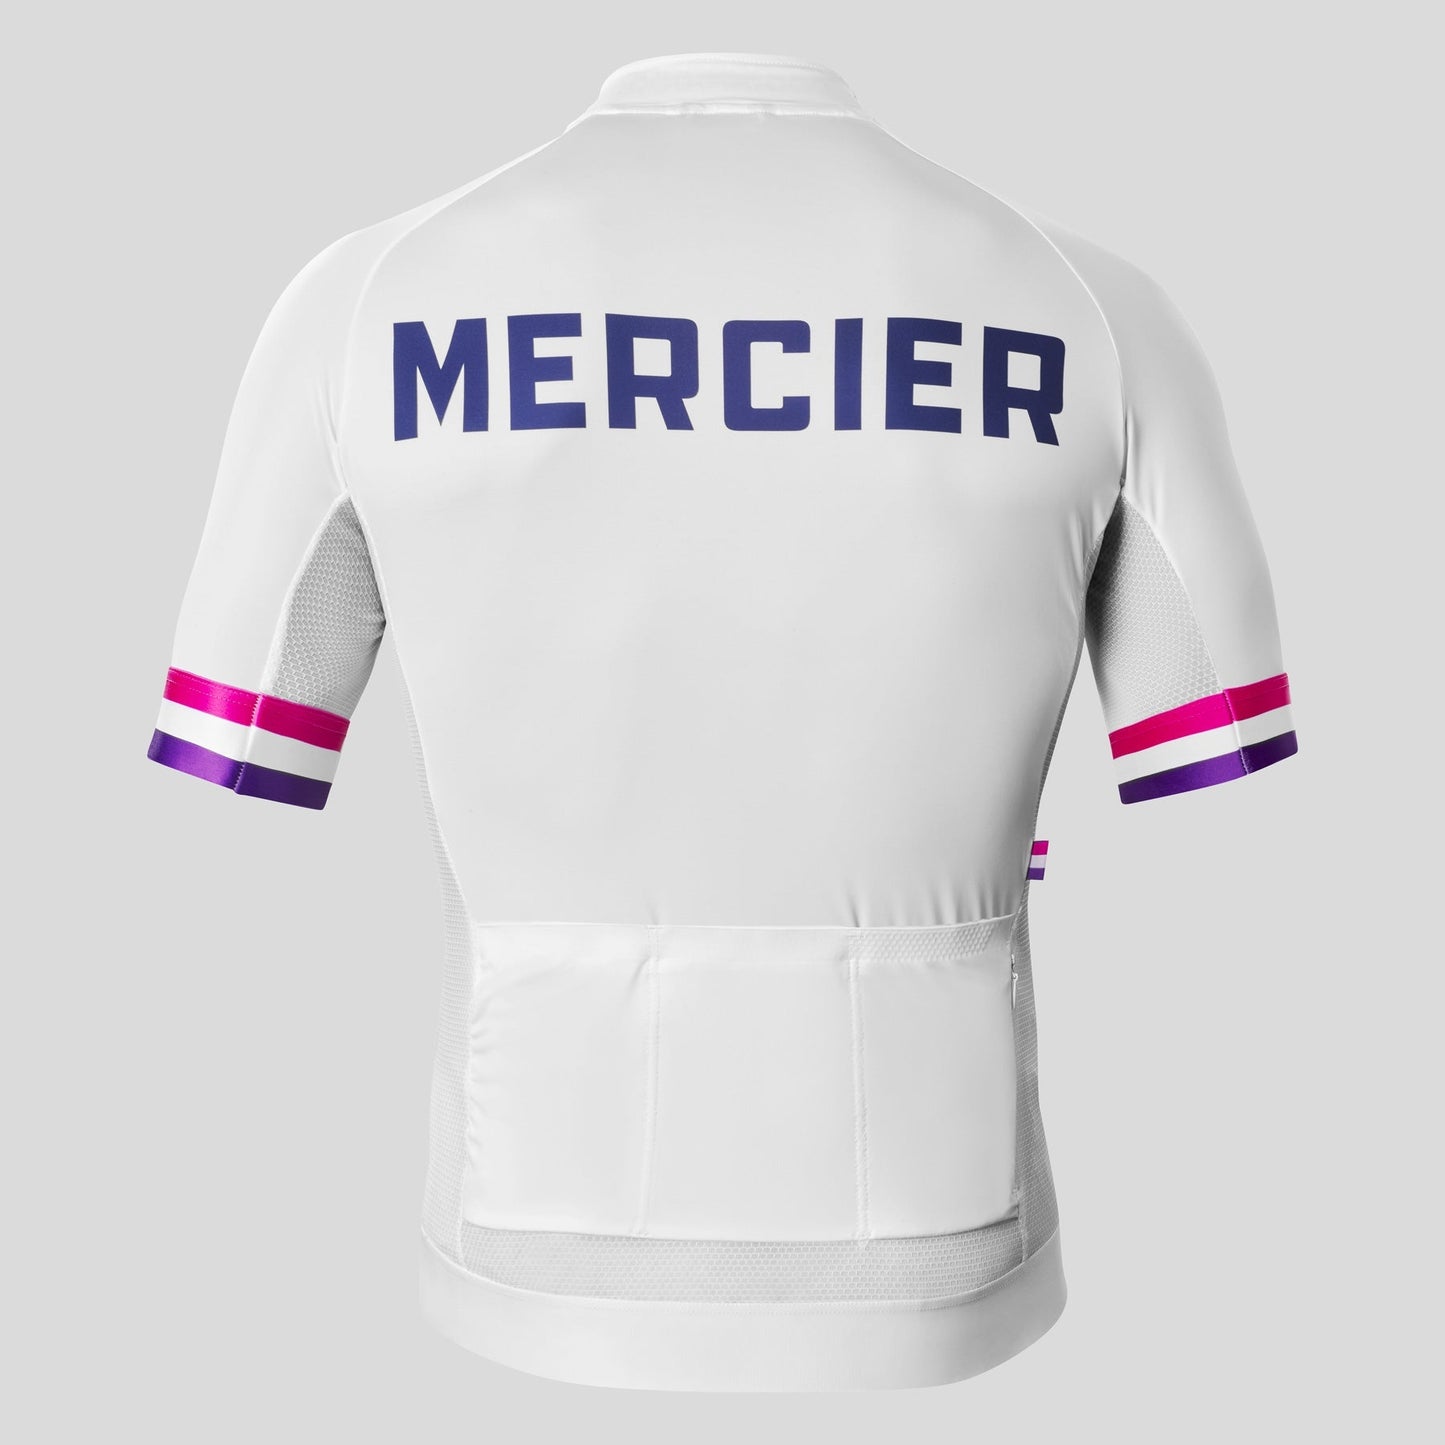 Mercier - Jersey Provence Men's Mercier Jersey 